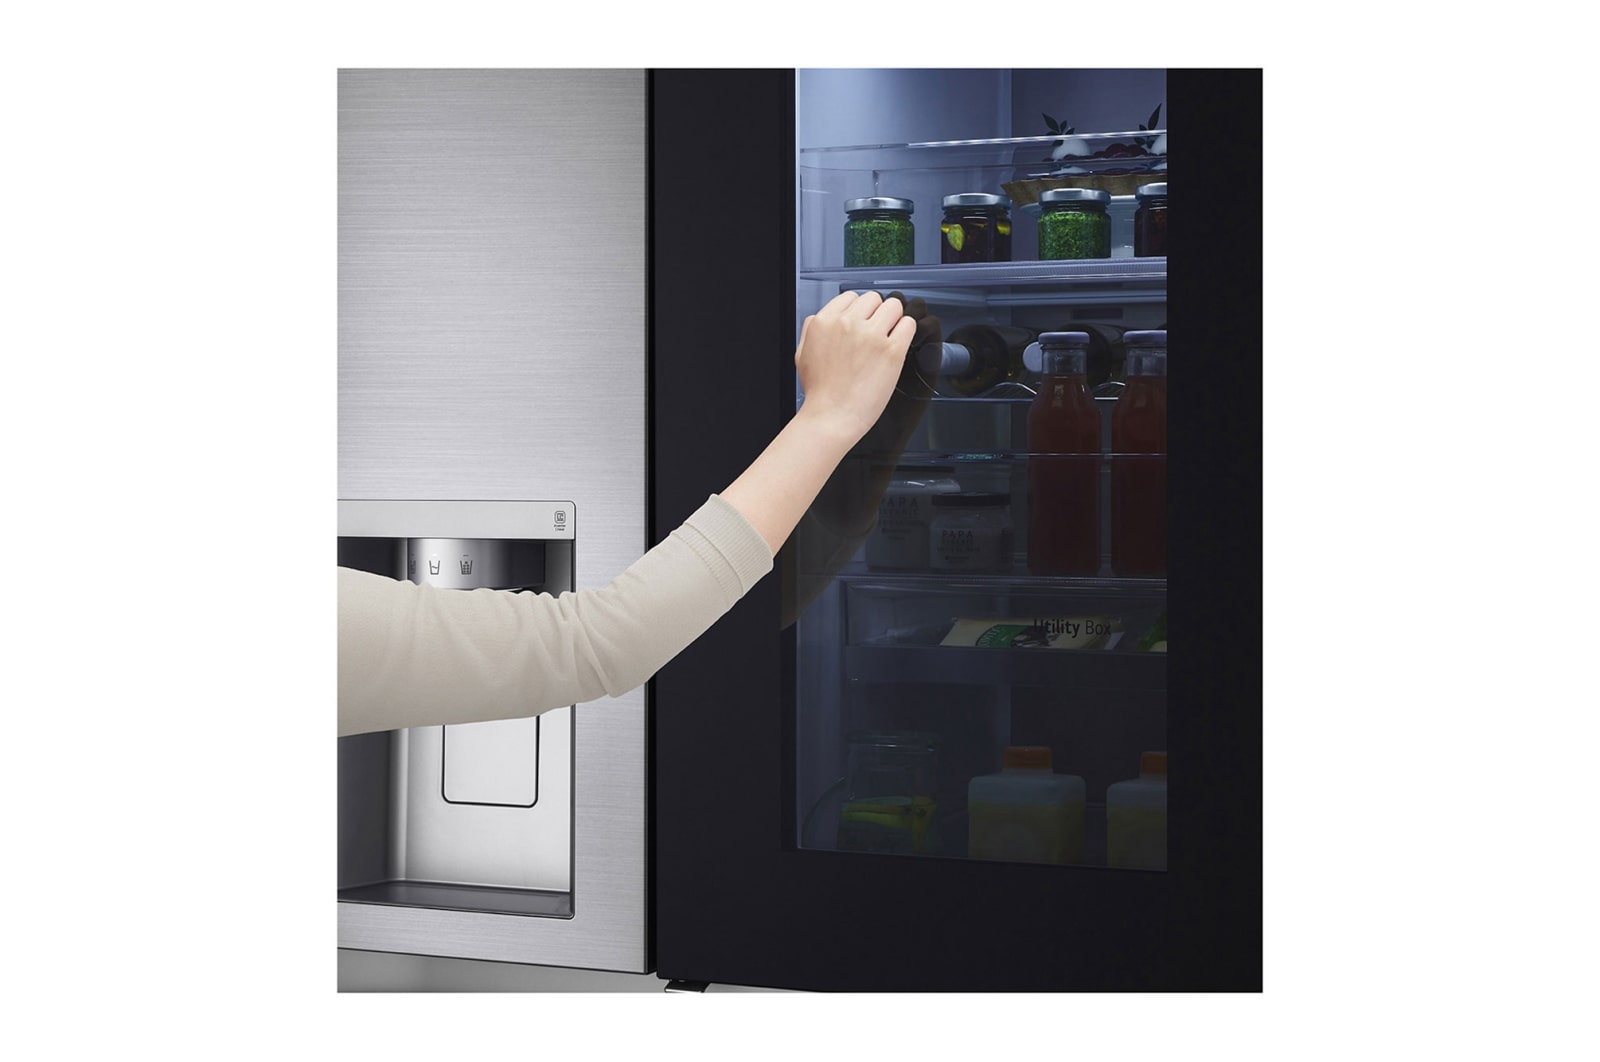 LG 598 Liters InstaView Refrigerator with UVnano™ Technology - Silver